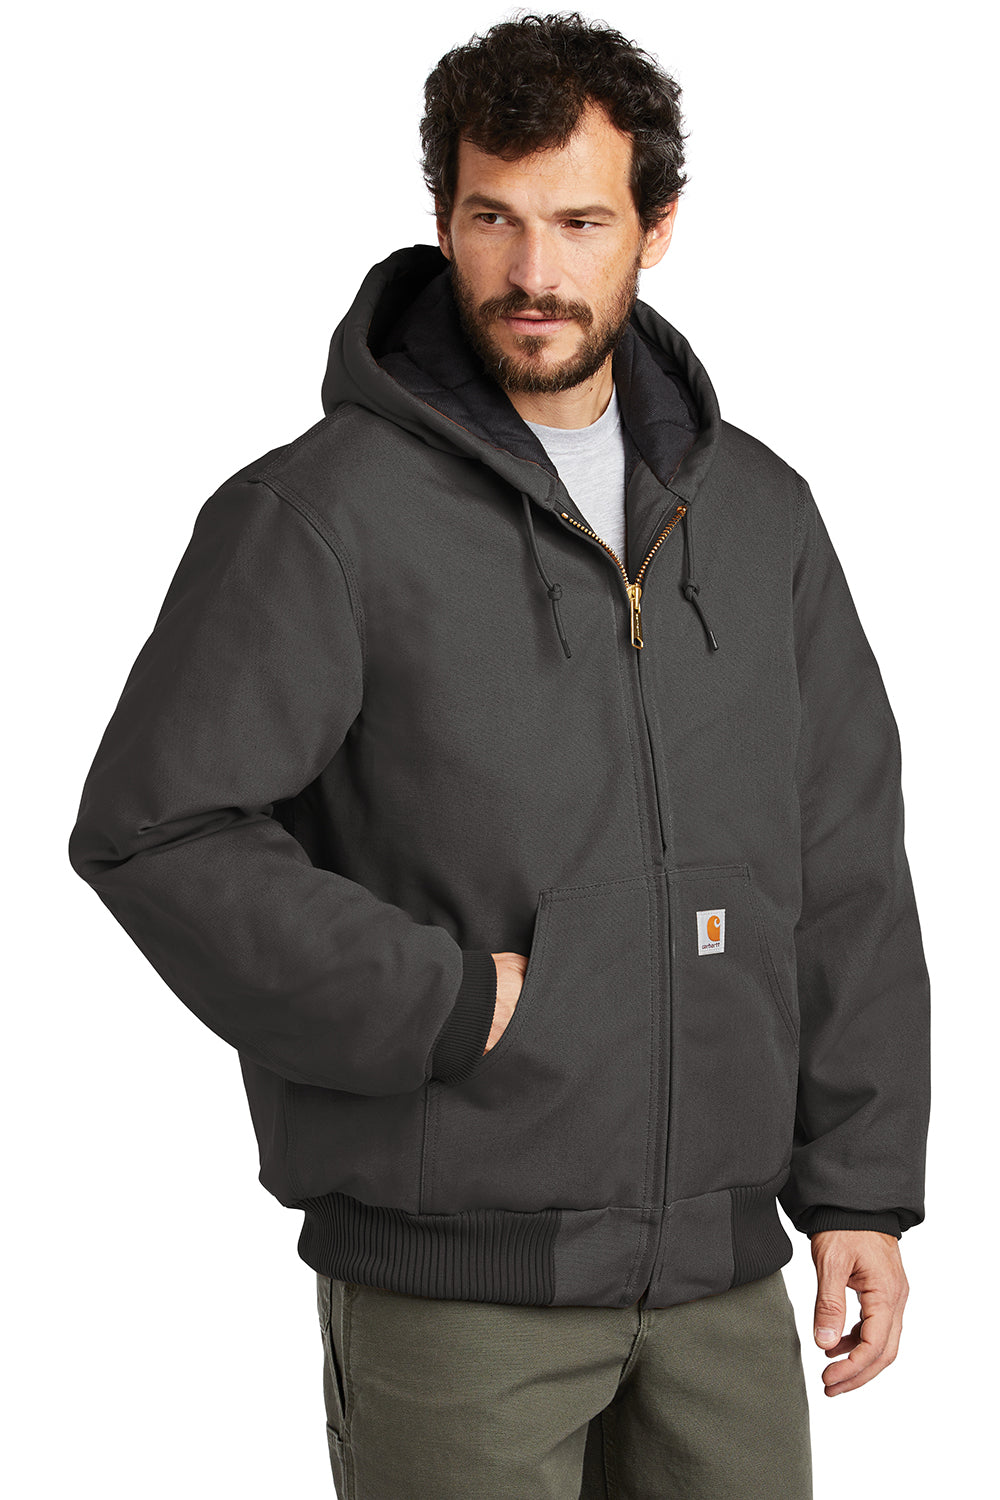 Carhartt CTSJ140/CTTSJ140 Mens Wind & Water Resistant Duck Cloth Full Zip Hooded Work Jacket Gravel Grey Model 3Q